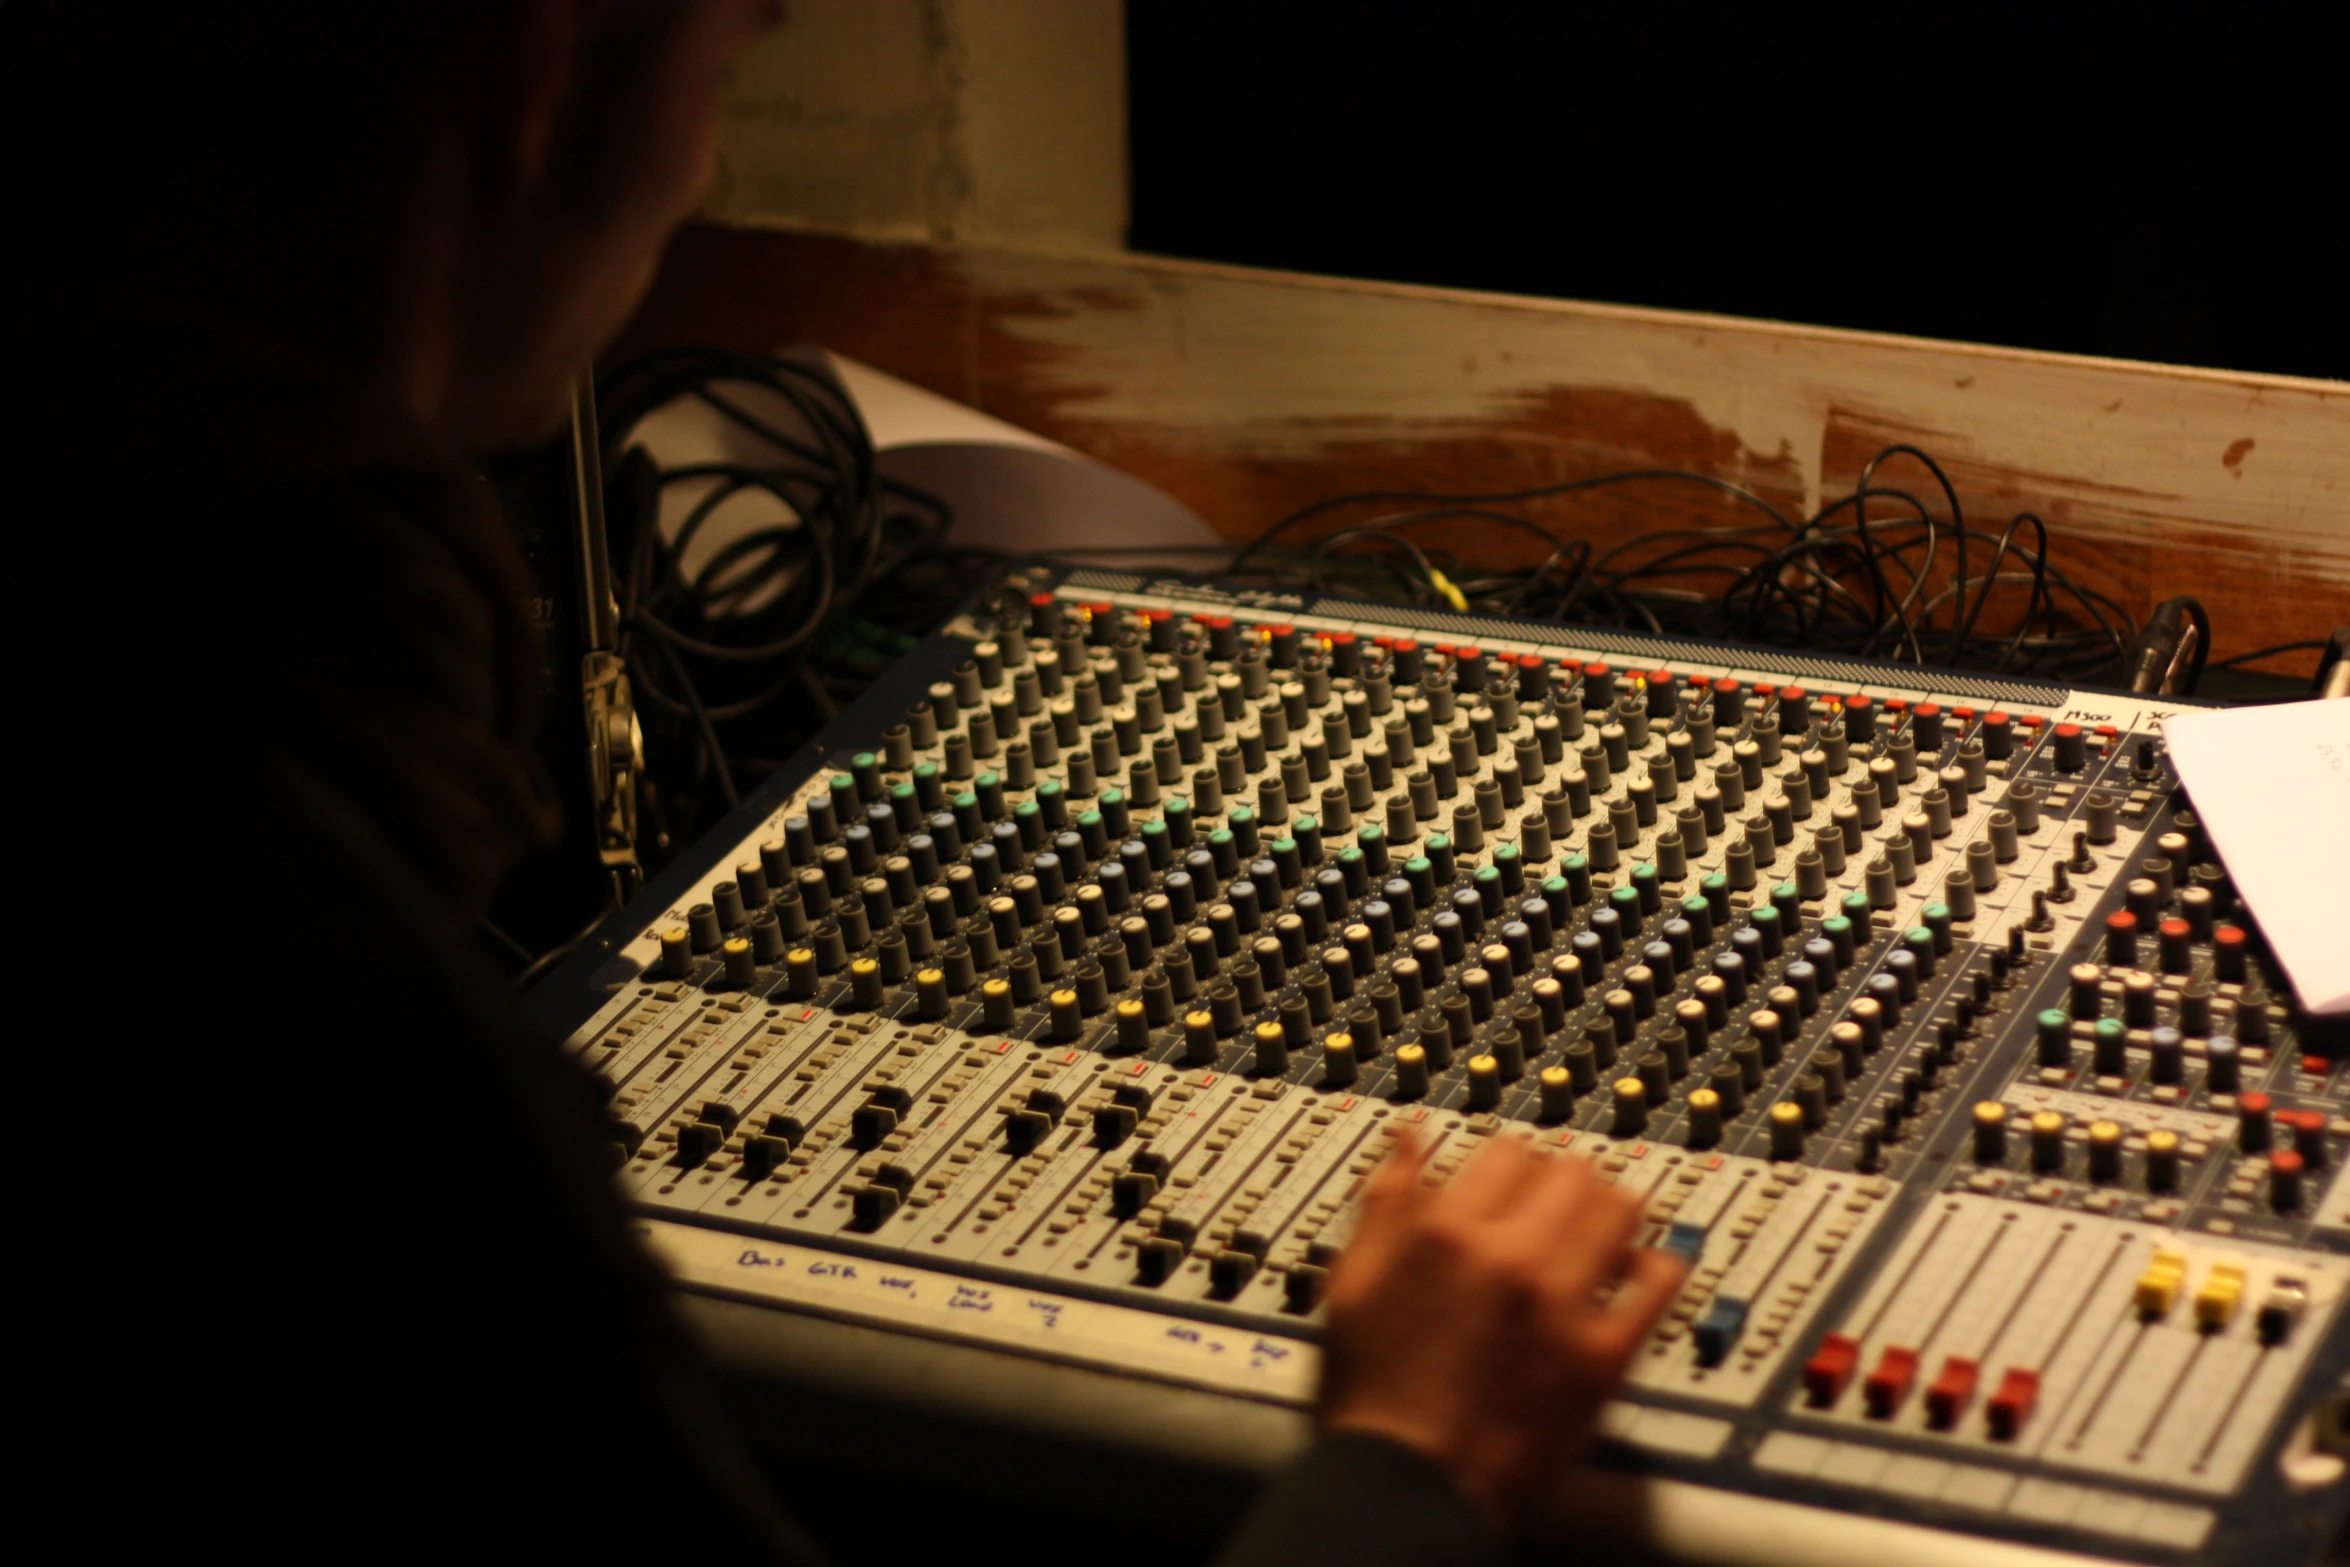 man behind sound board recording in music studio